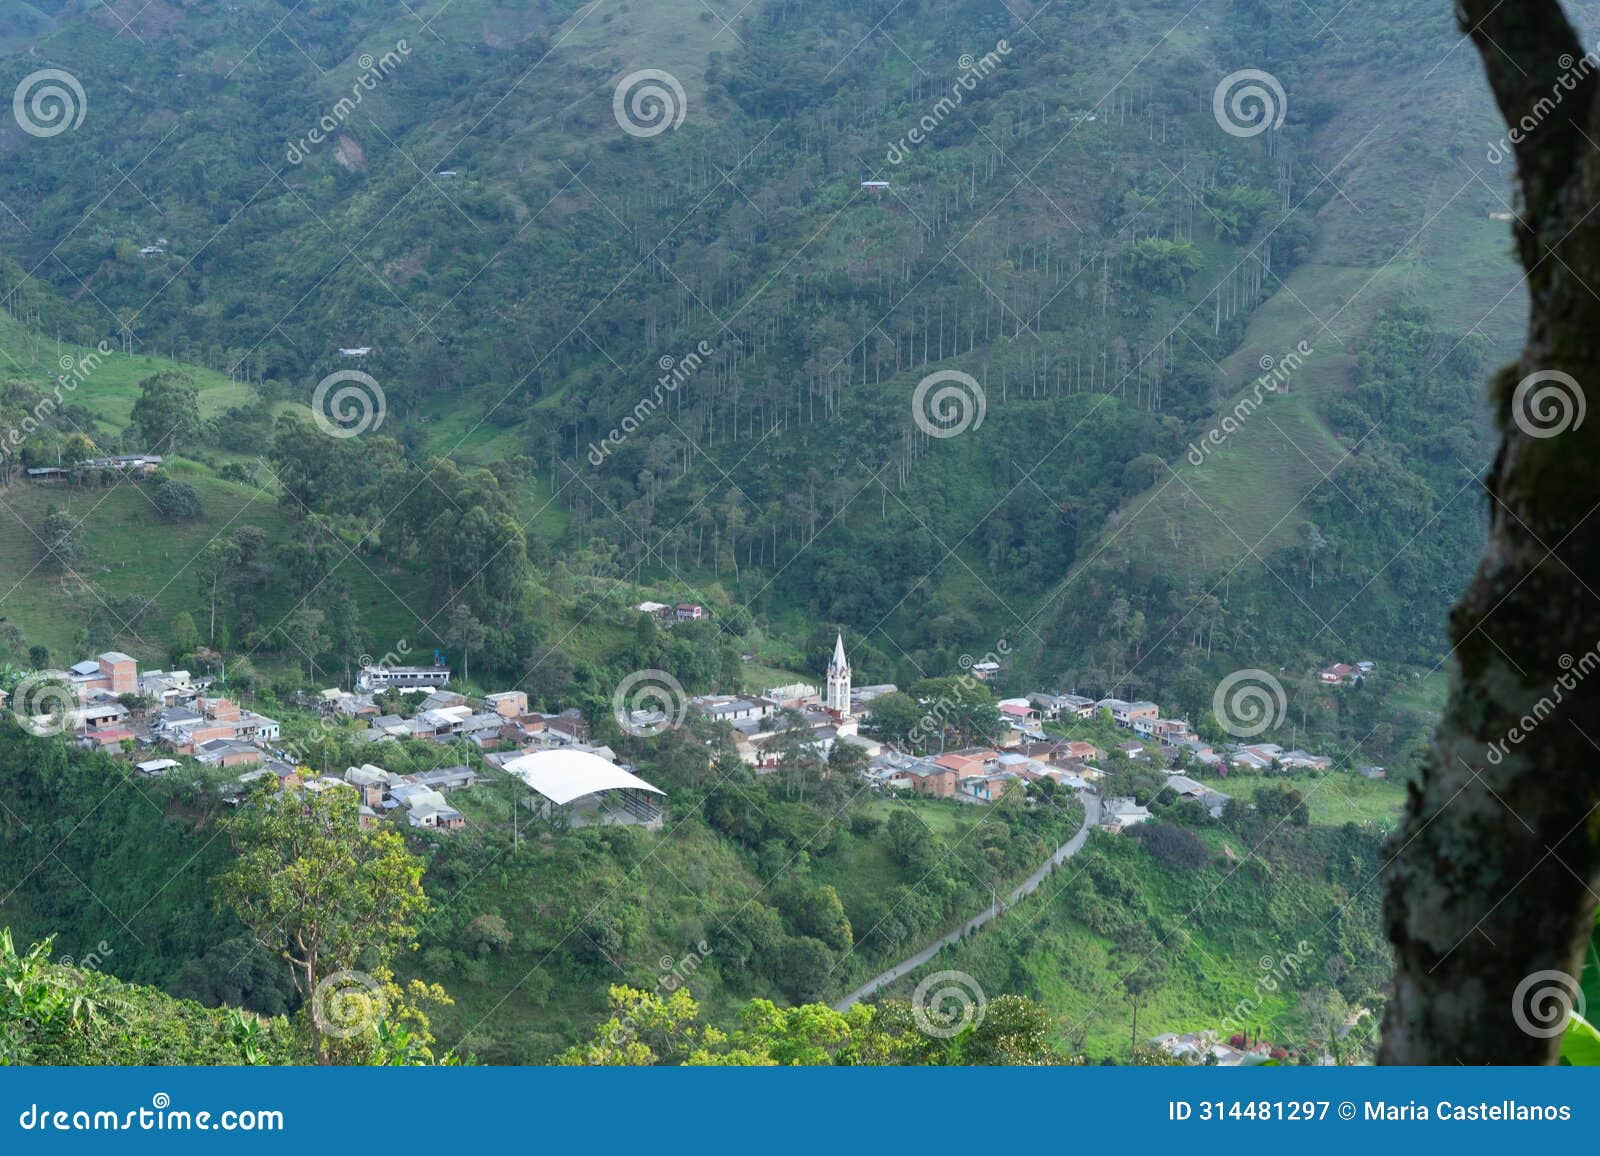 town of carmen de la venta, liborina, antioquia. colombia